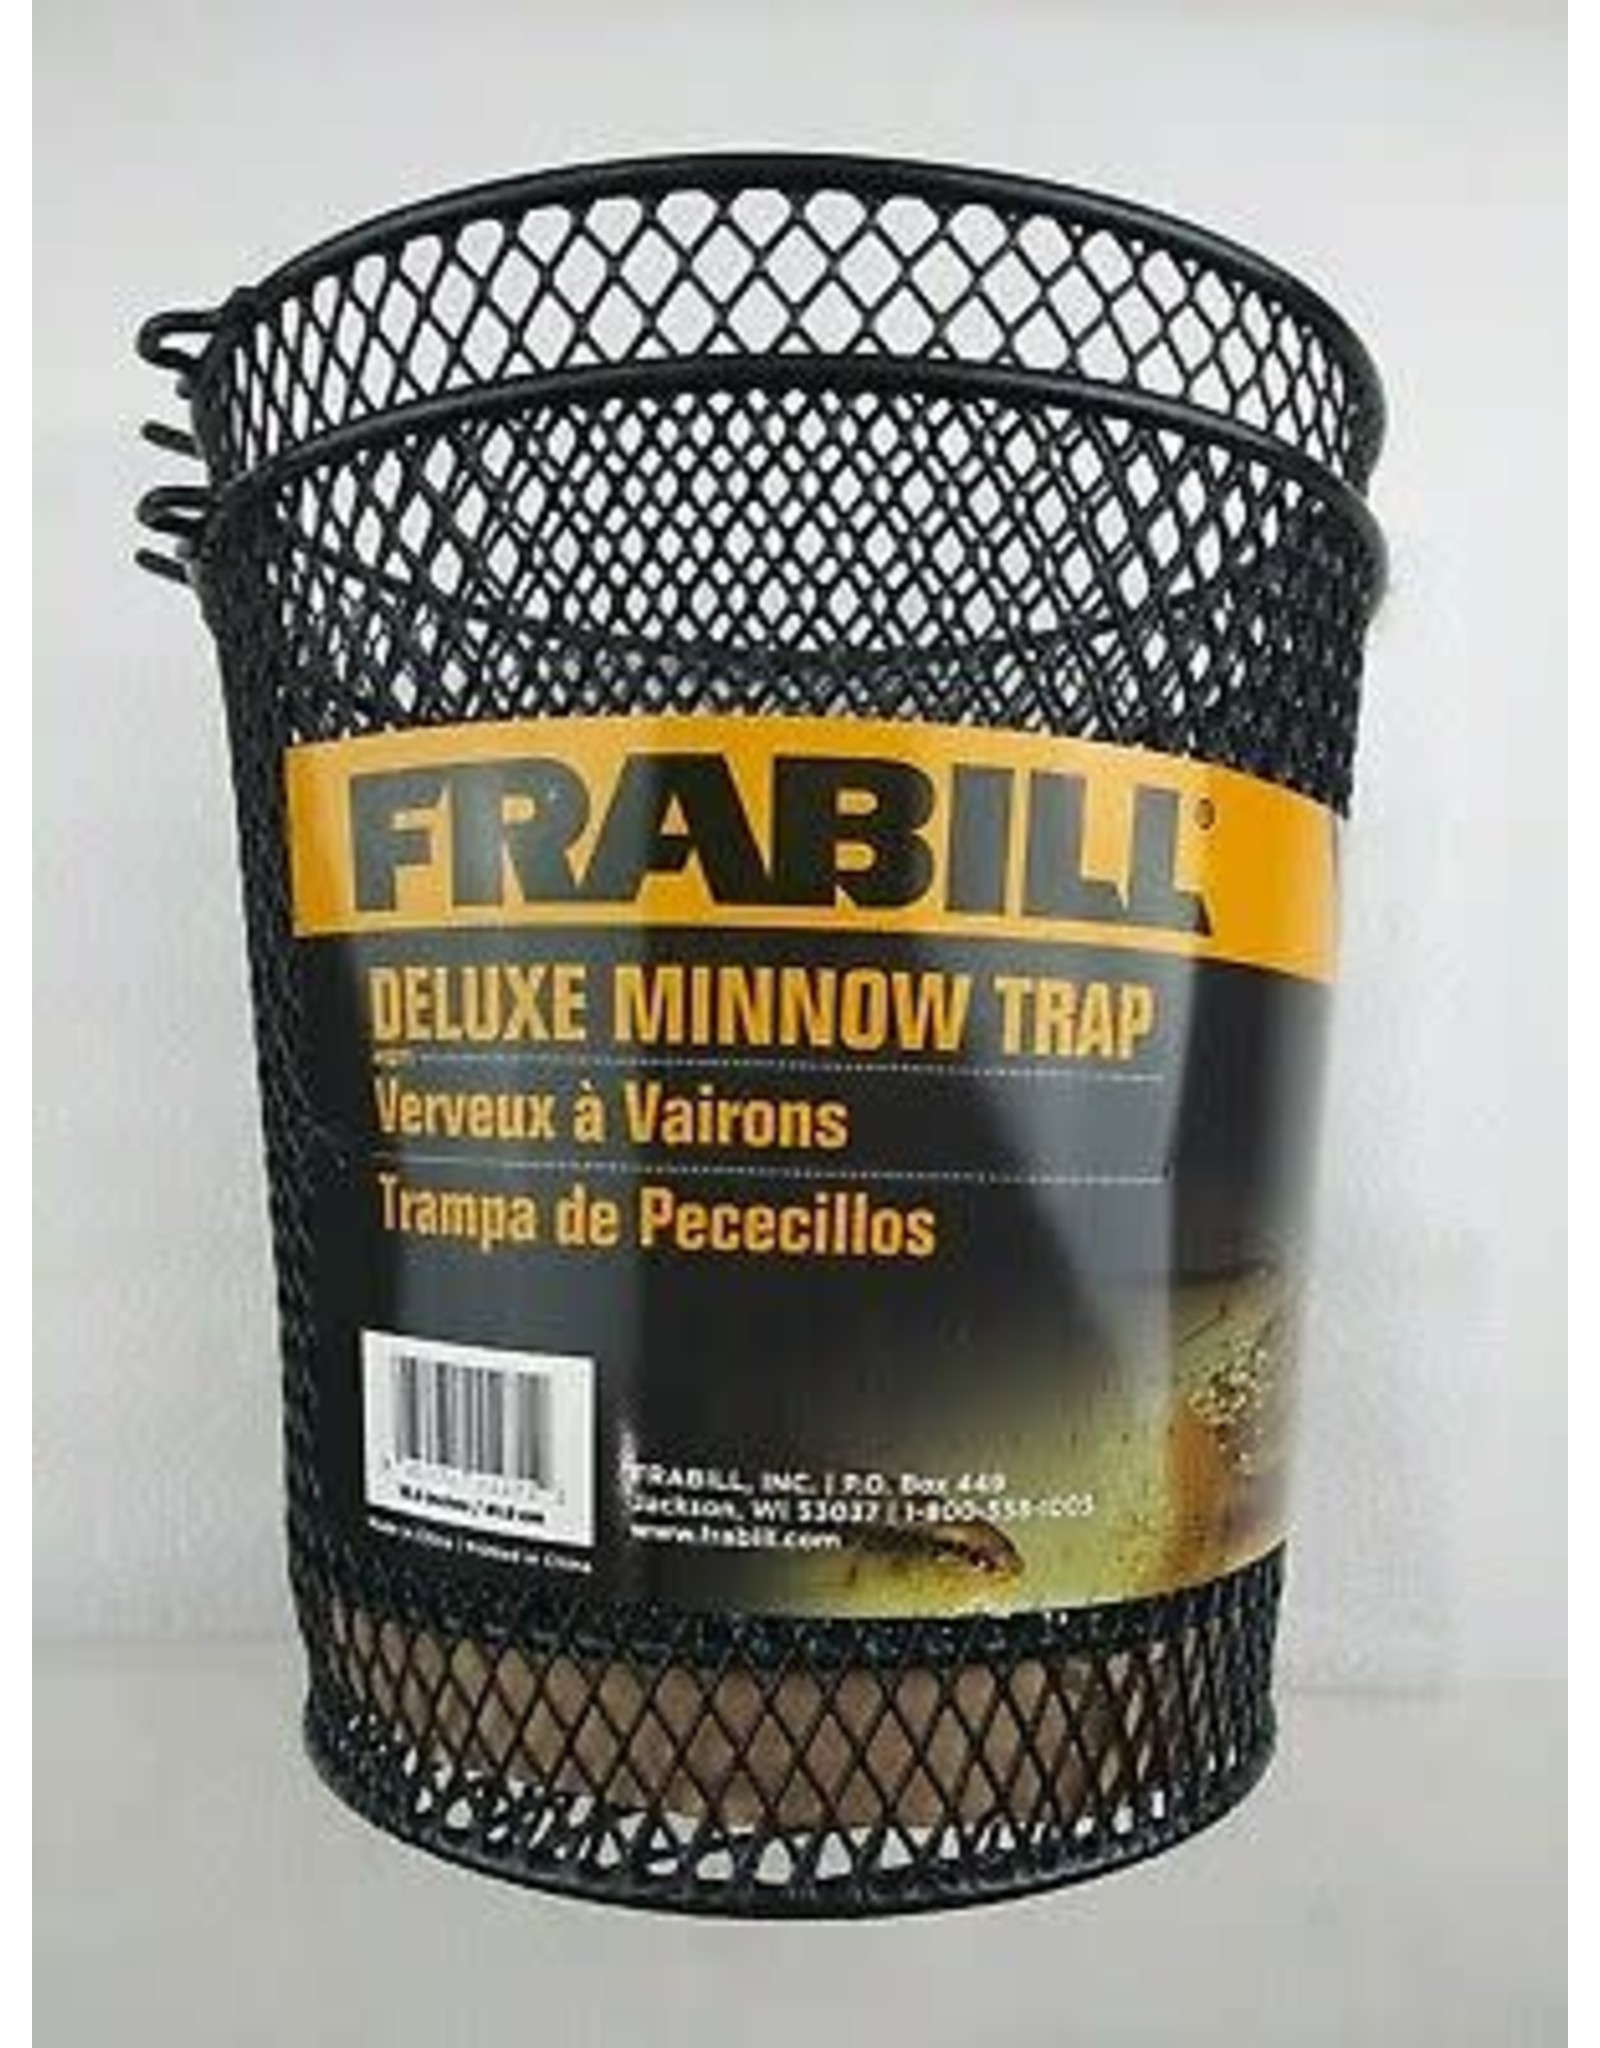 Blk Frabill 1271 Minnow Trap 1/4 Mesh - Bronson